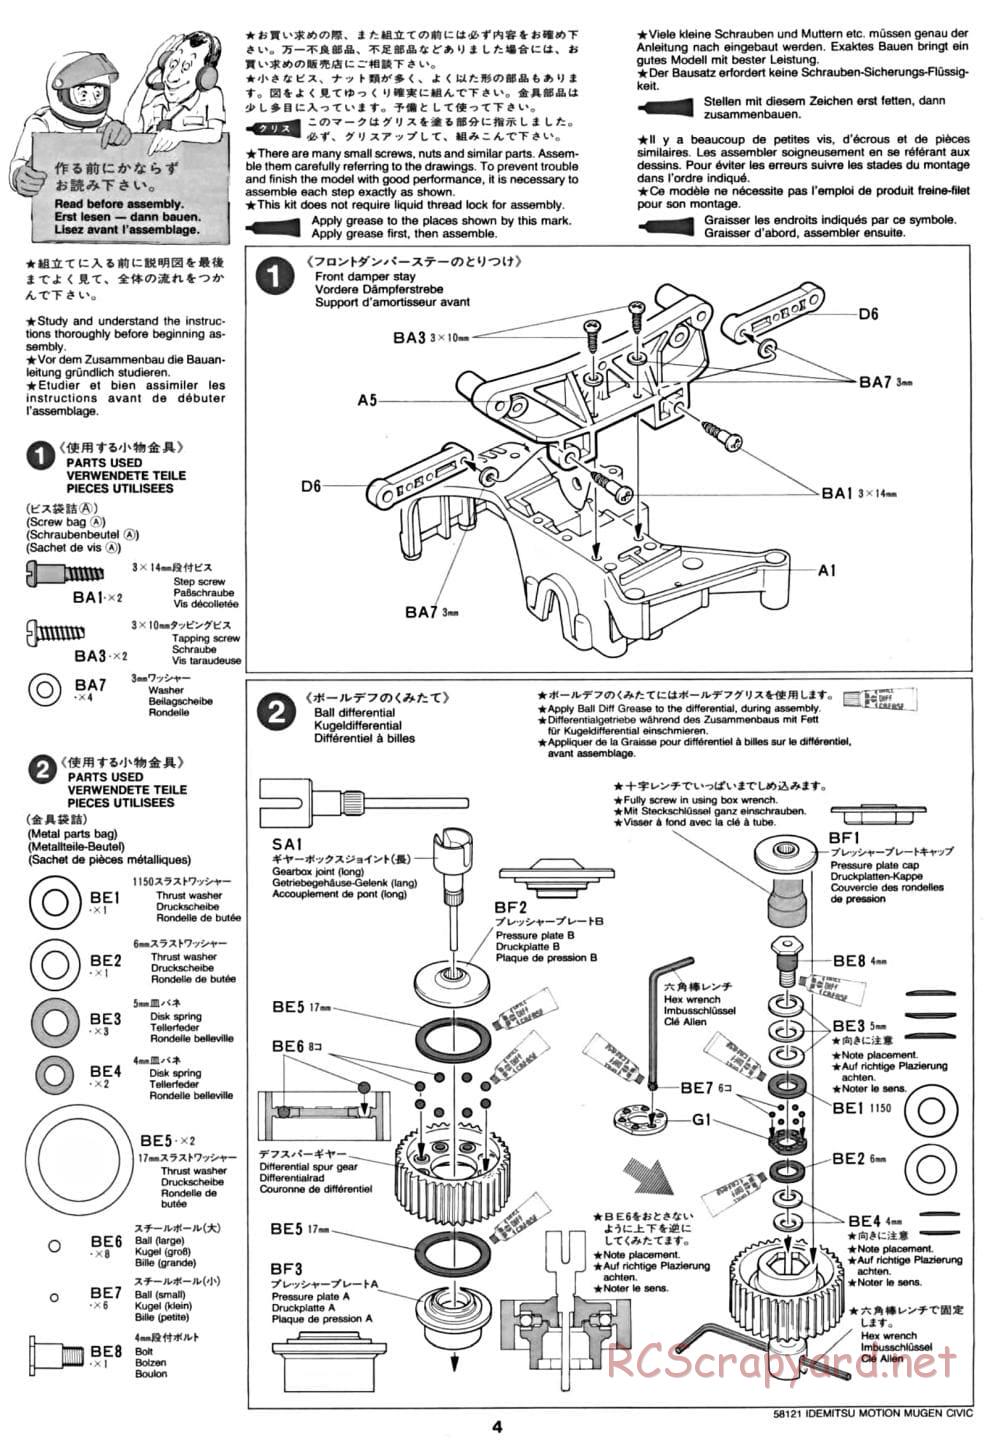 Tamiya - Idemitsu Motion Mugen Civic - FF-01 Chassis - Manual - Page 4